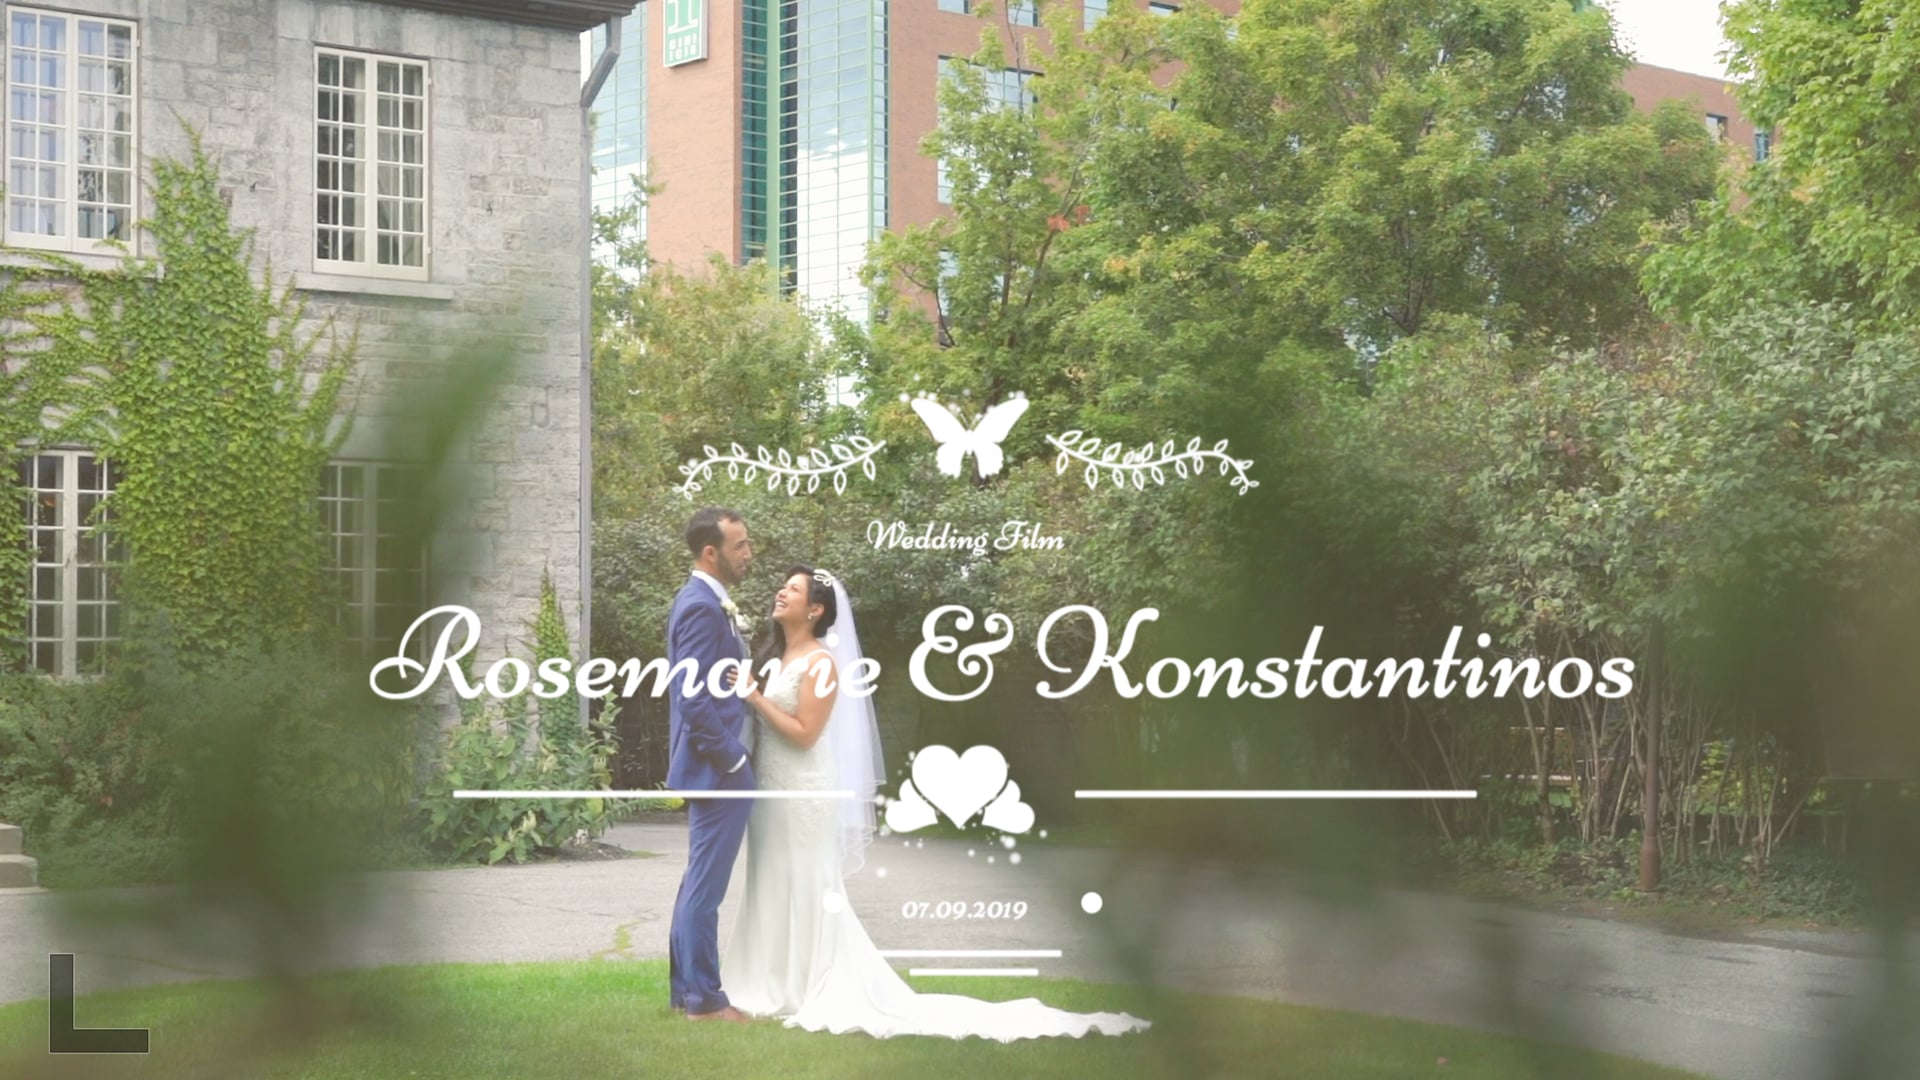 Rosie & Konstantinos' Wedding Film